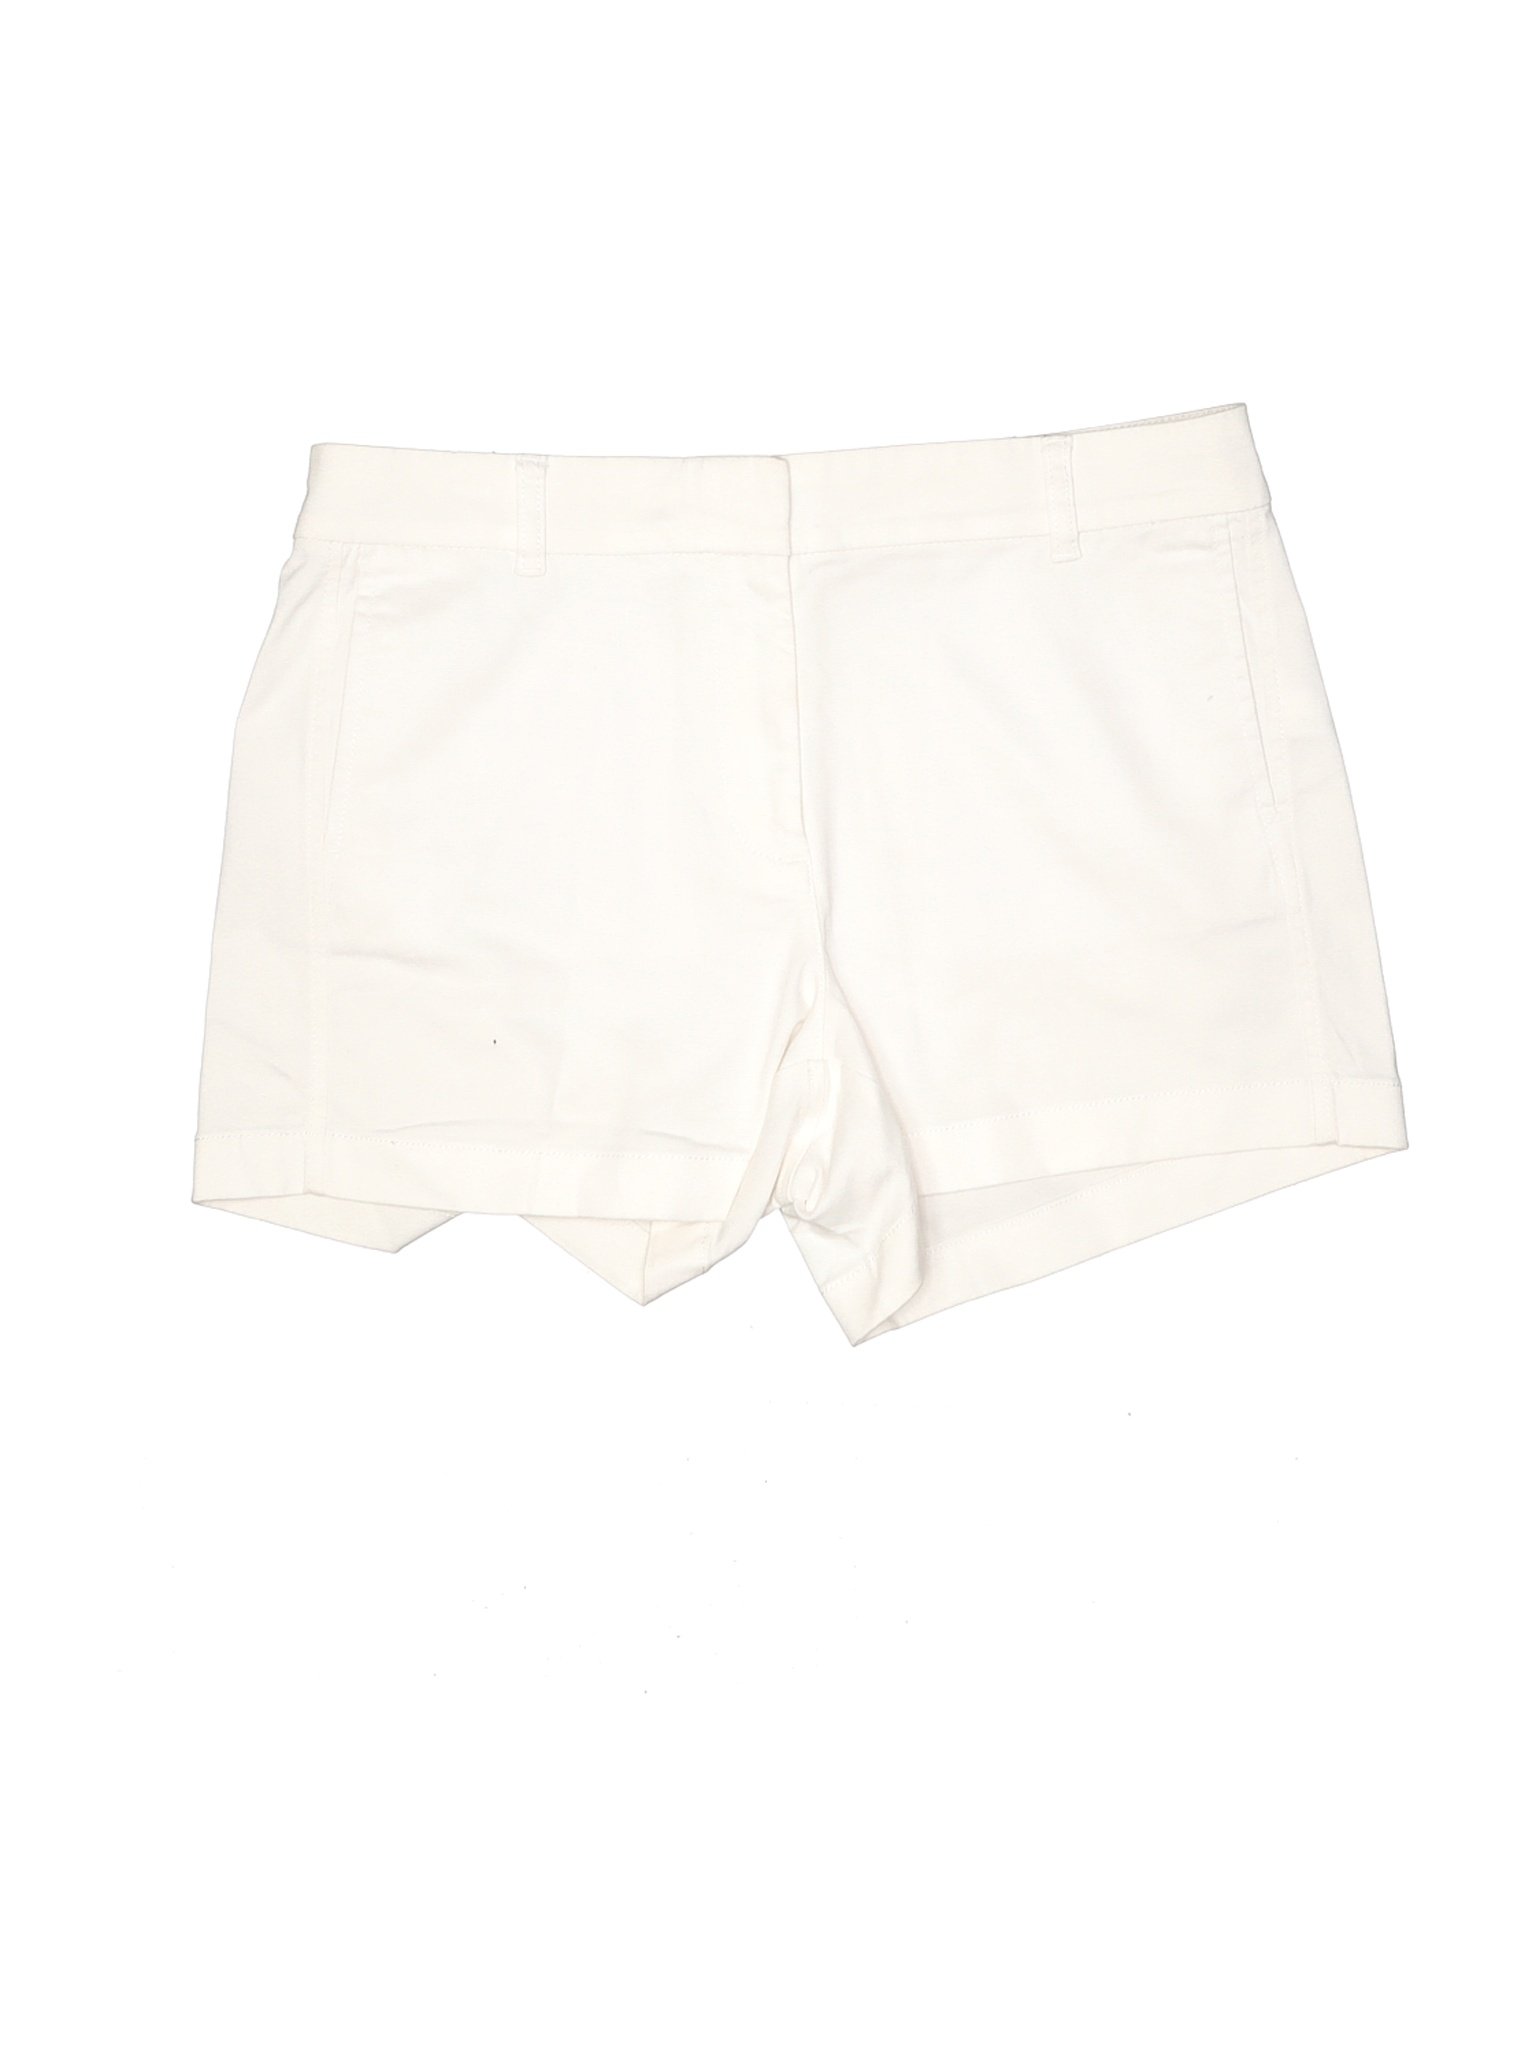 J.Crew Women White Khaki Shorts 8 | eBay